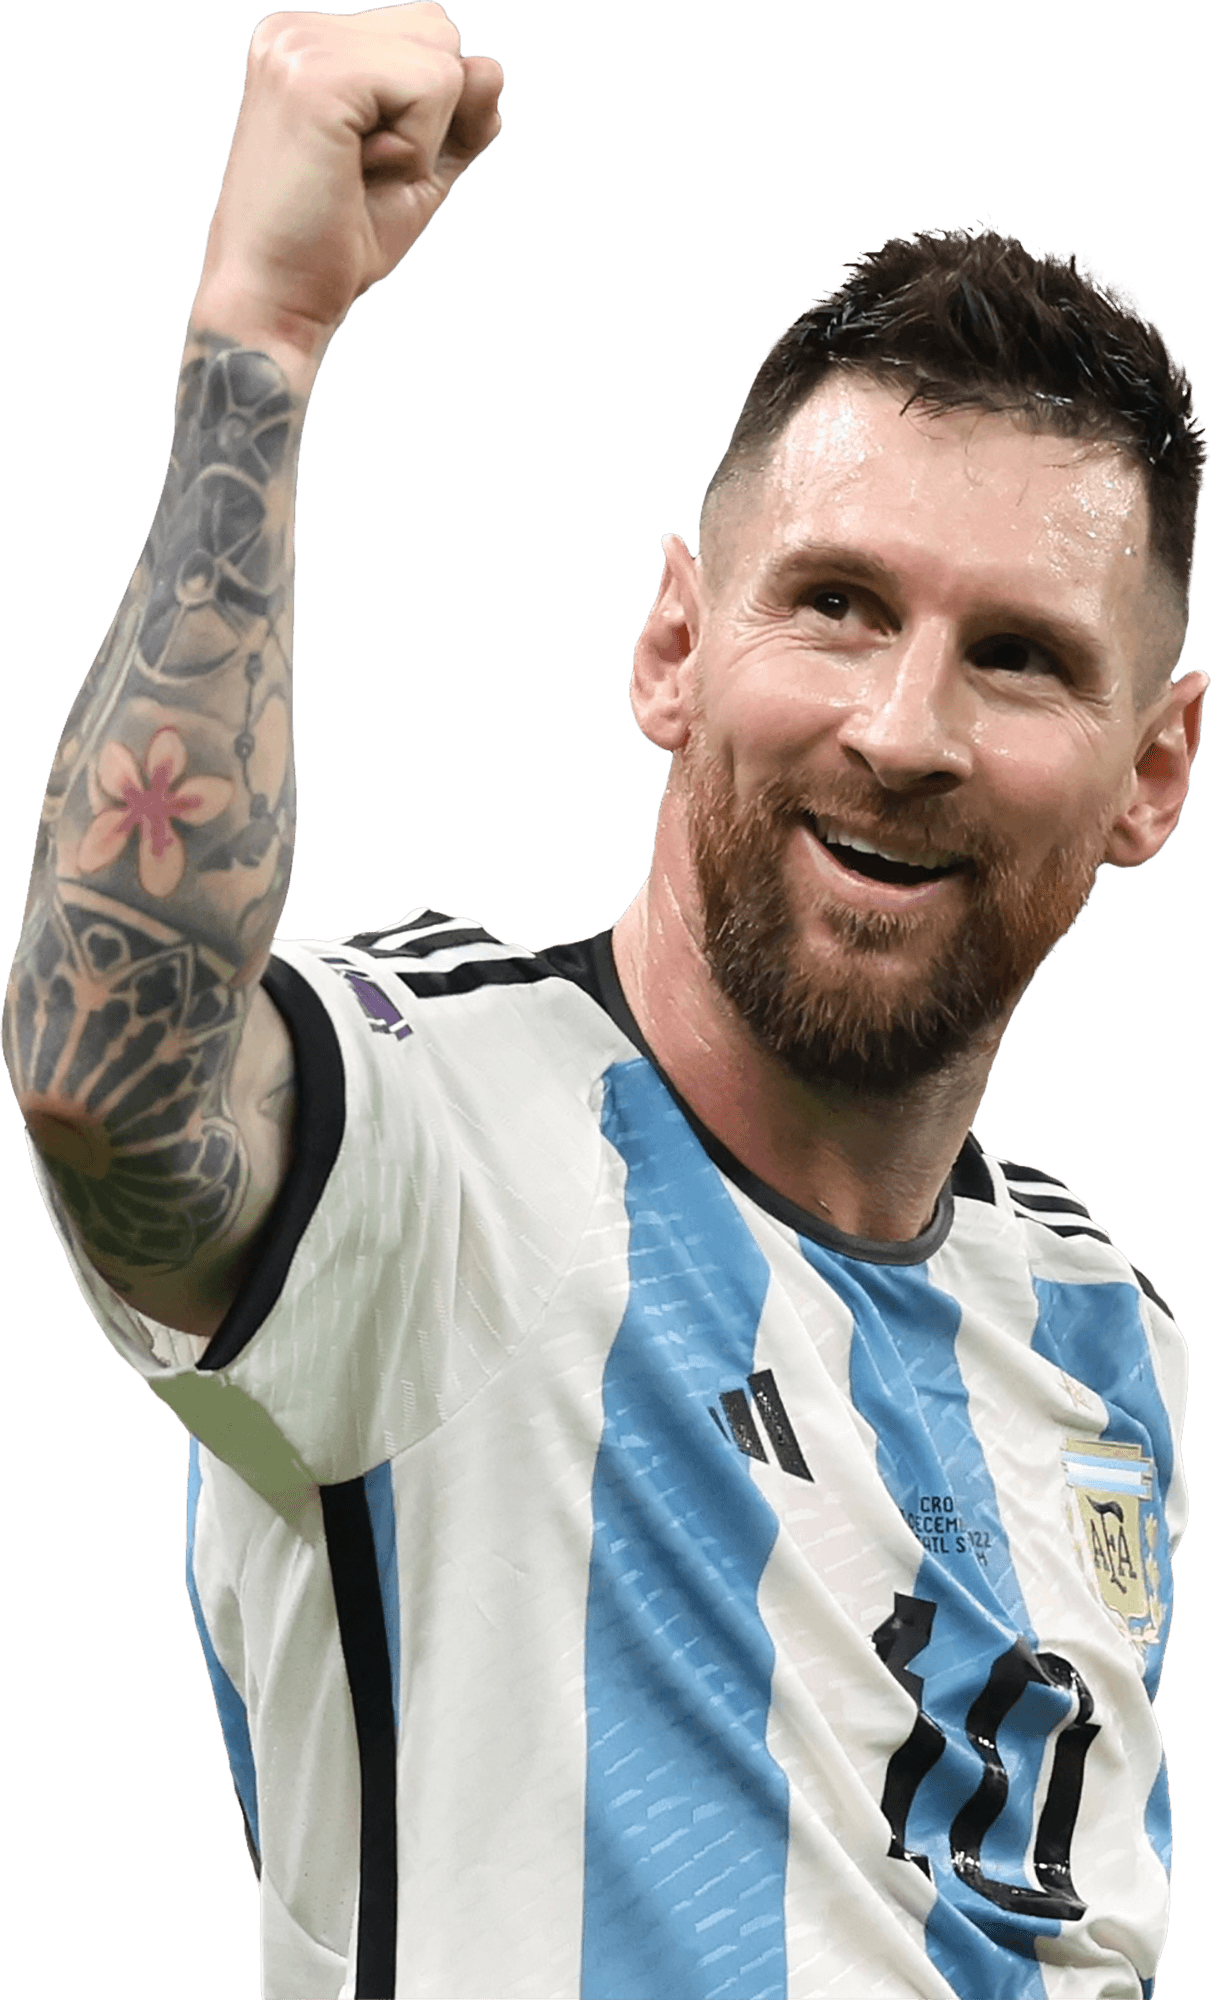 Lionel Messi Argentina football render FootyRenders